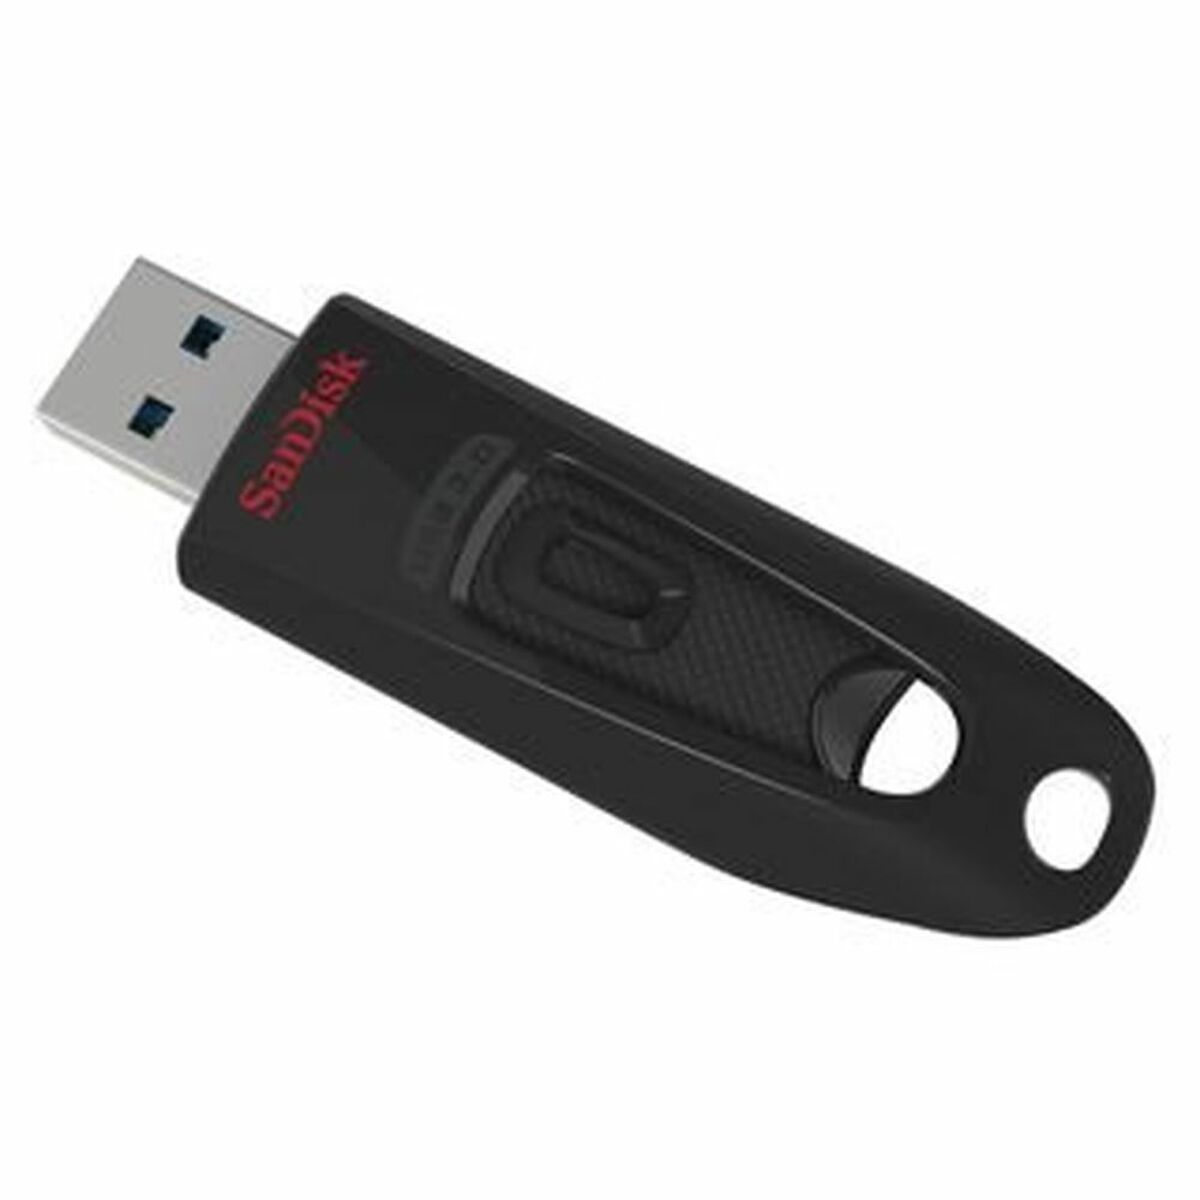 SanDisk SDCZ48-016G-U46 USB 3.0 Pendrive Schwarz